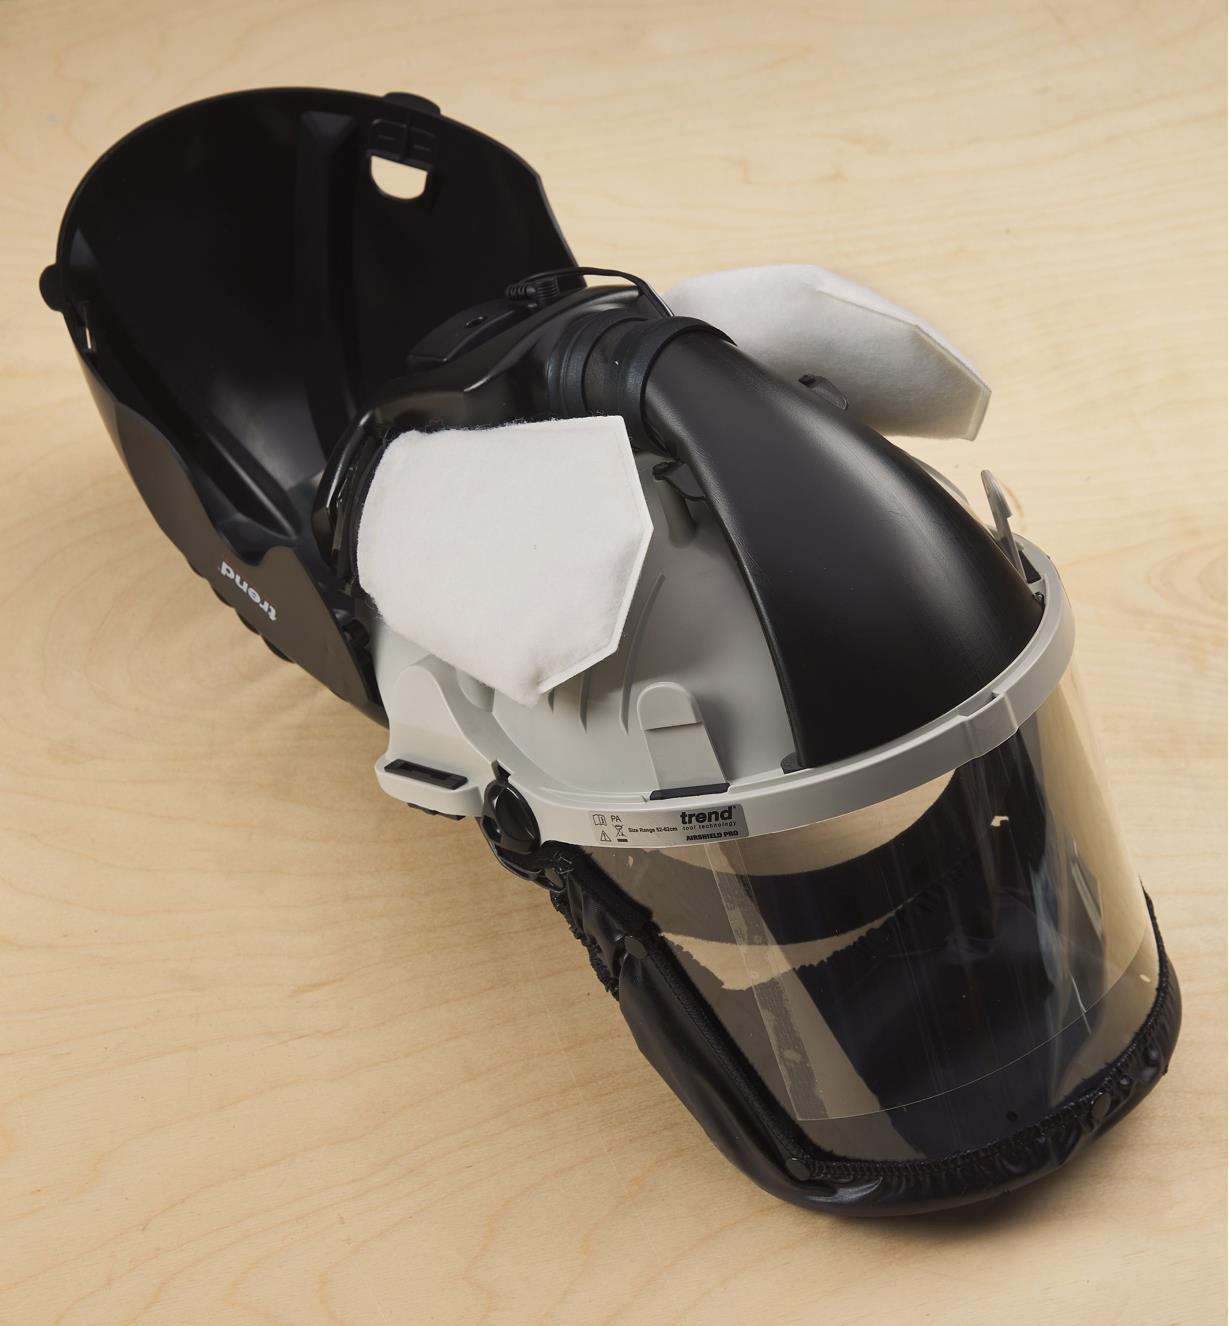 Air filters inside the top of an open helmet